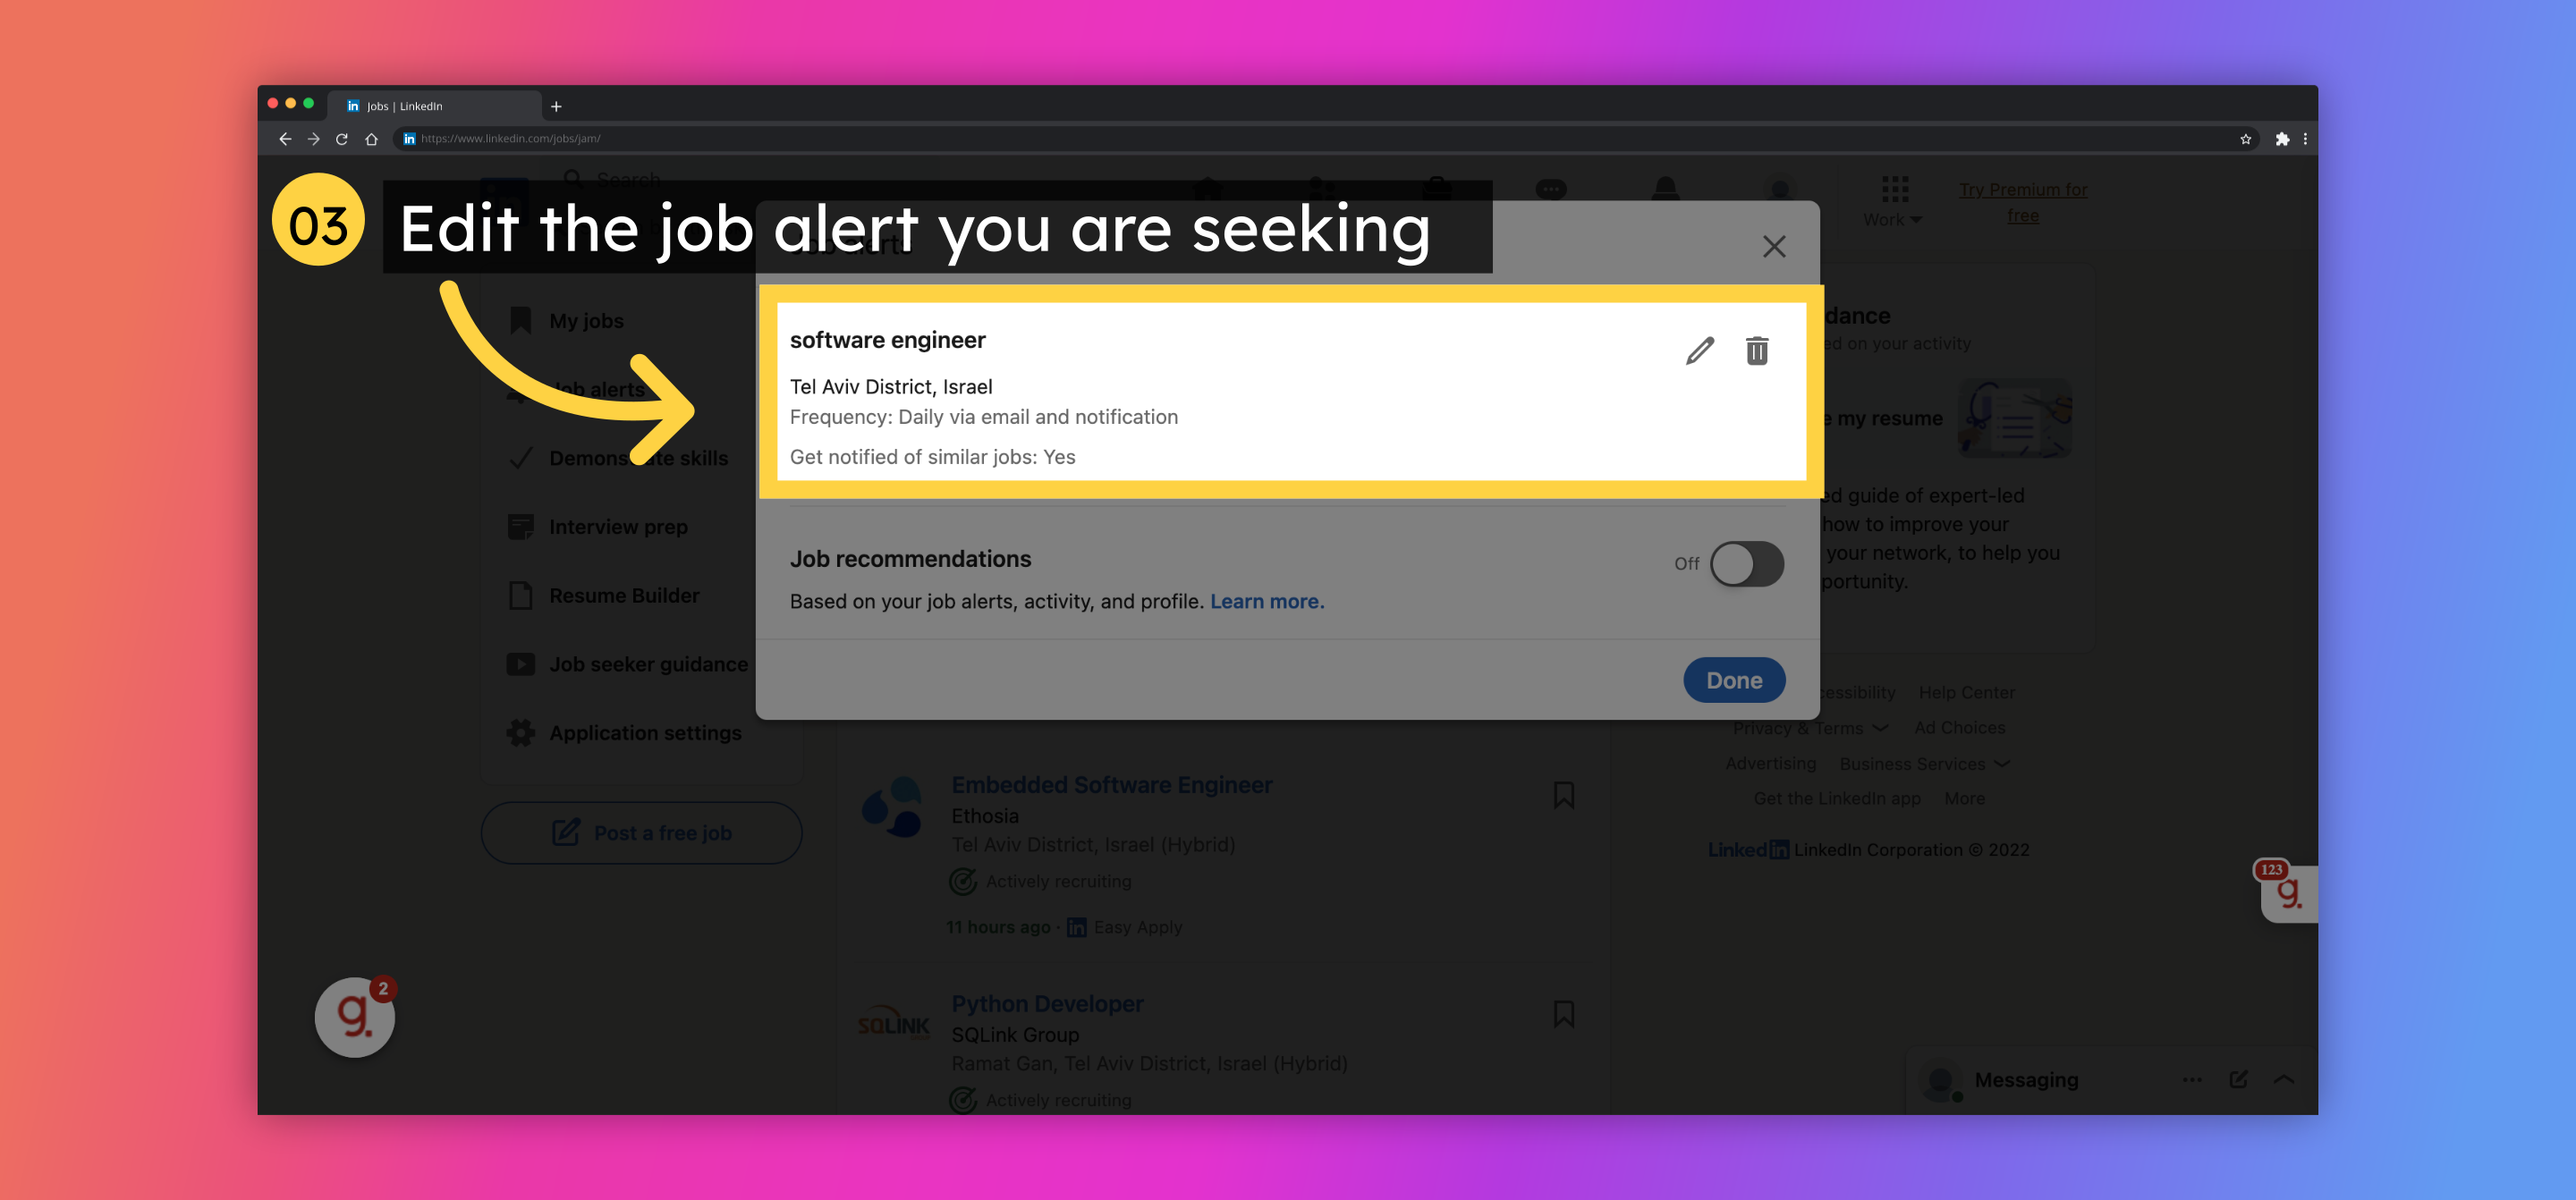 Edit the job alert you are seeking